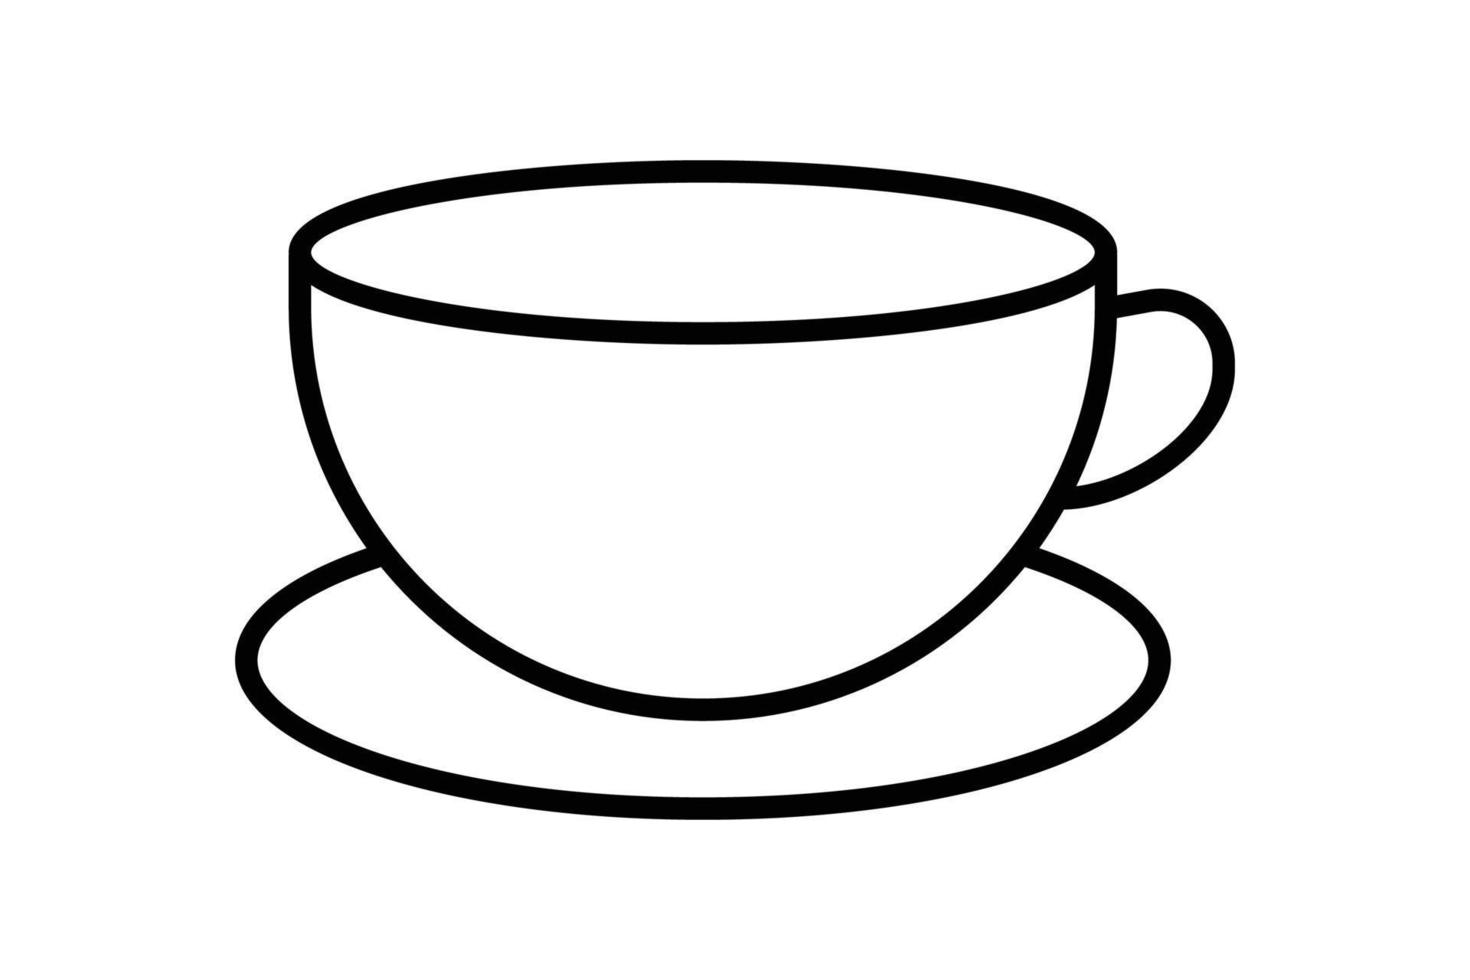 Breakfast icon illustration. coffee cup icon. Line icon style. Simple vector design editable